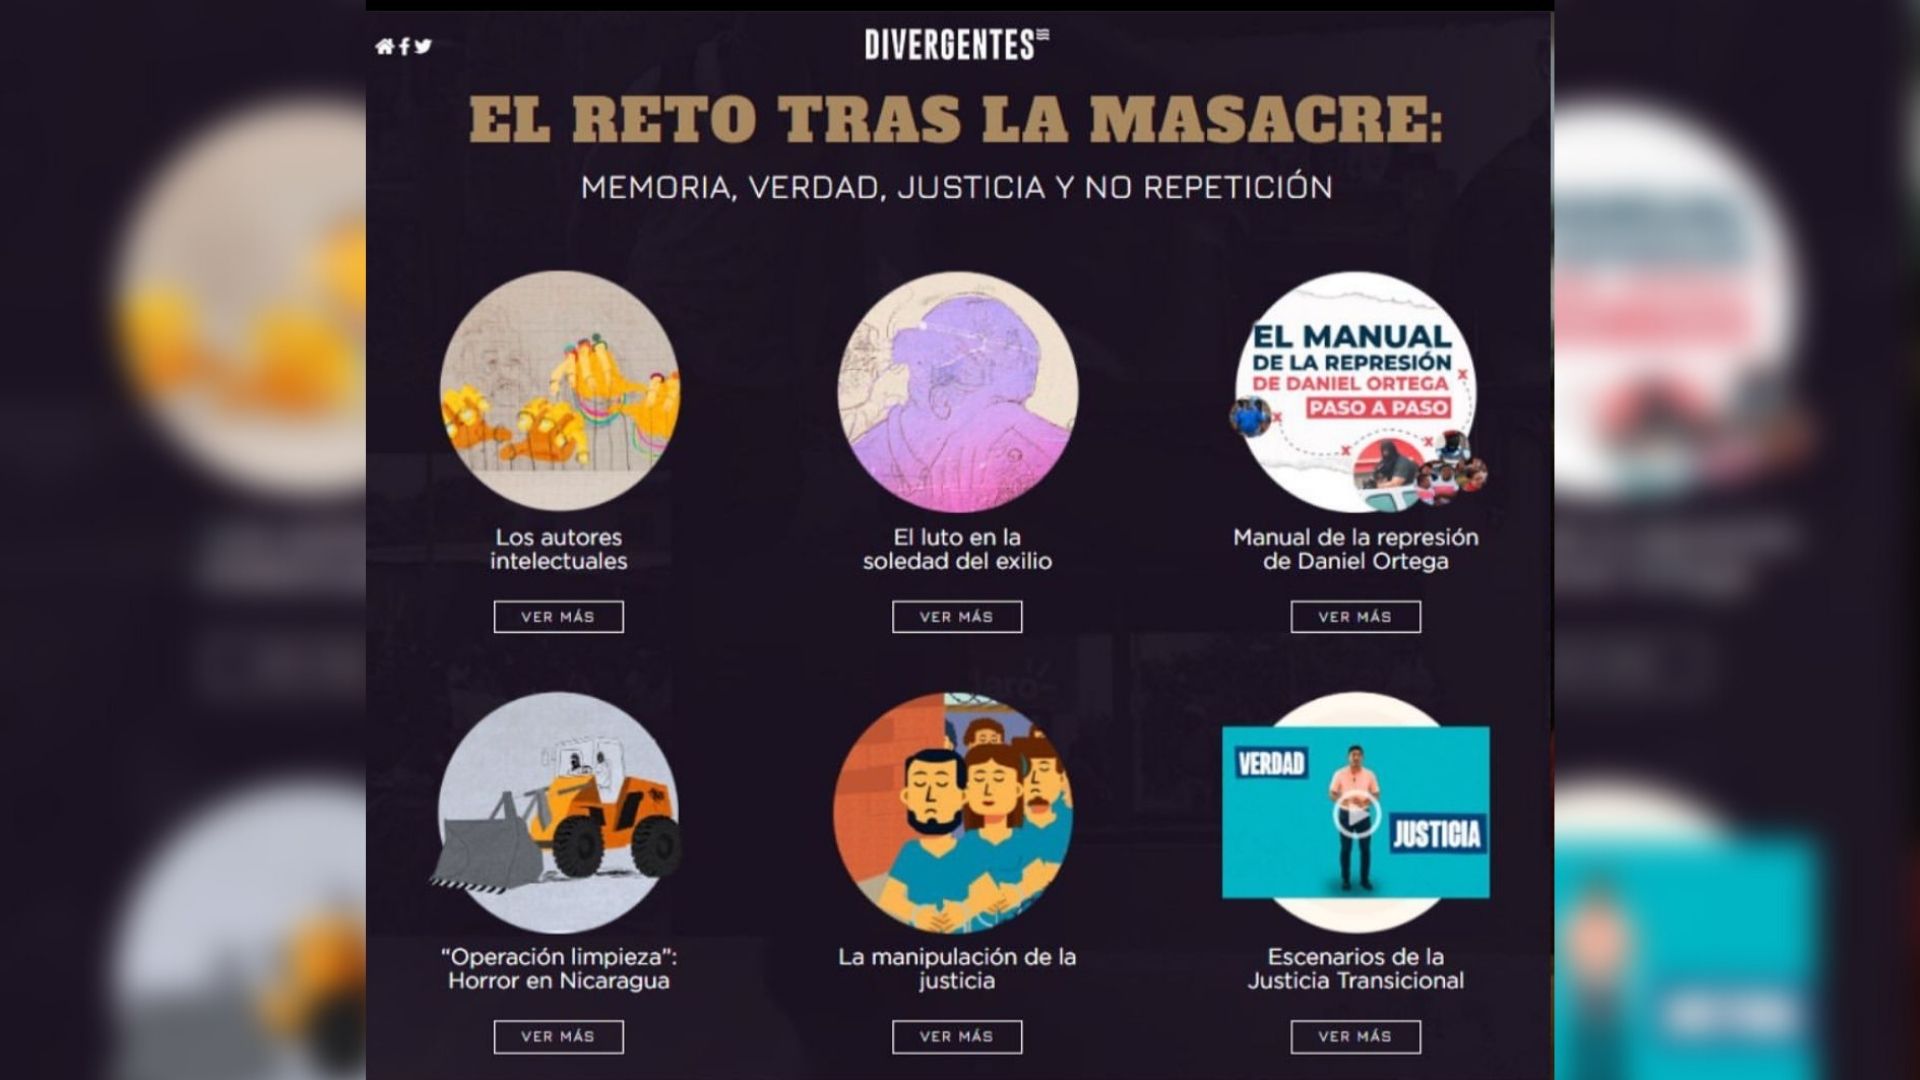 Divergentes wins the Ortega y Gasset award with a report on the “Daniel Ortega massacre”